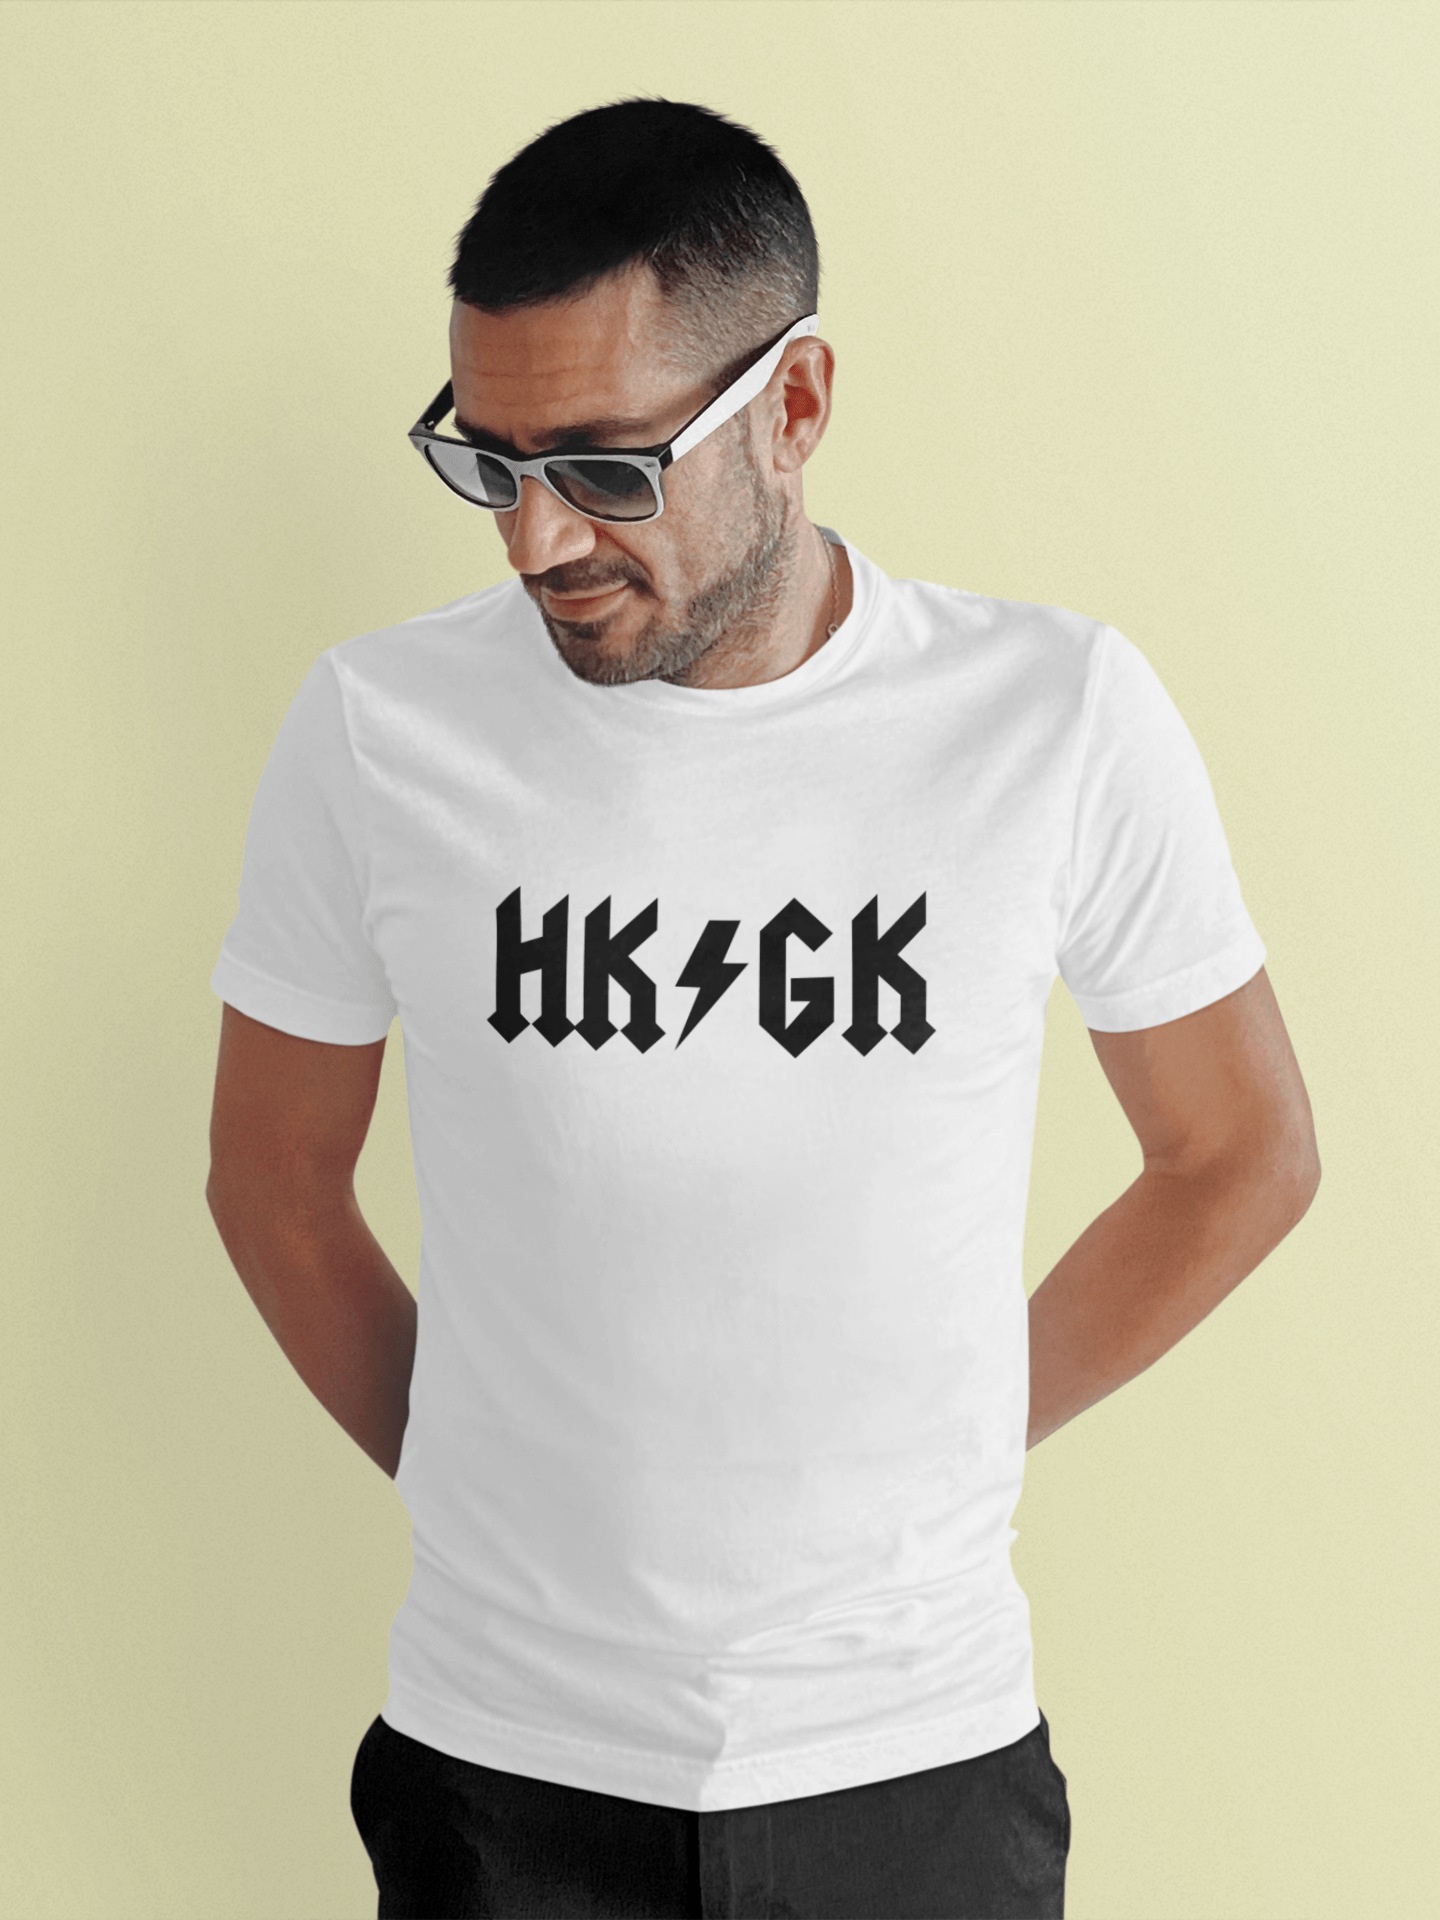 Idees Vol Vrees® "AC/DC HK/GK" Men's T-shirt